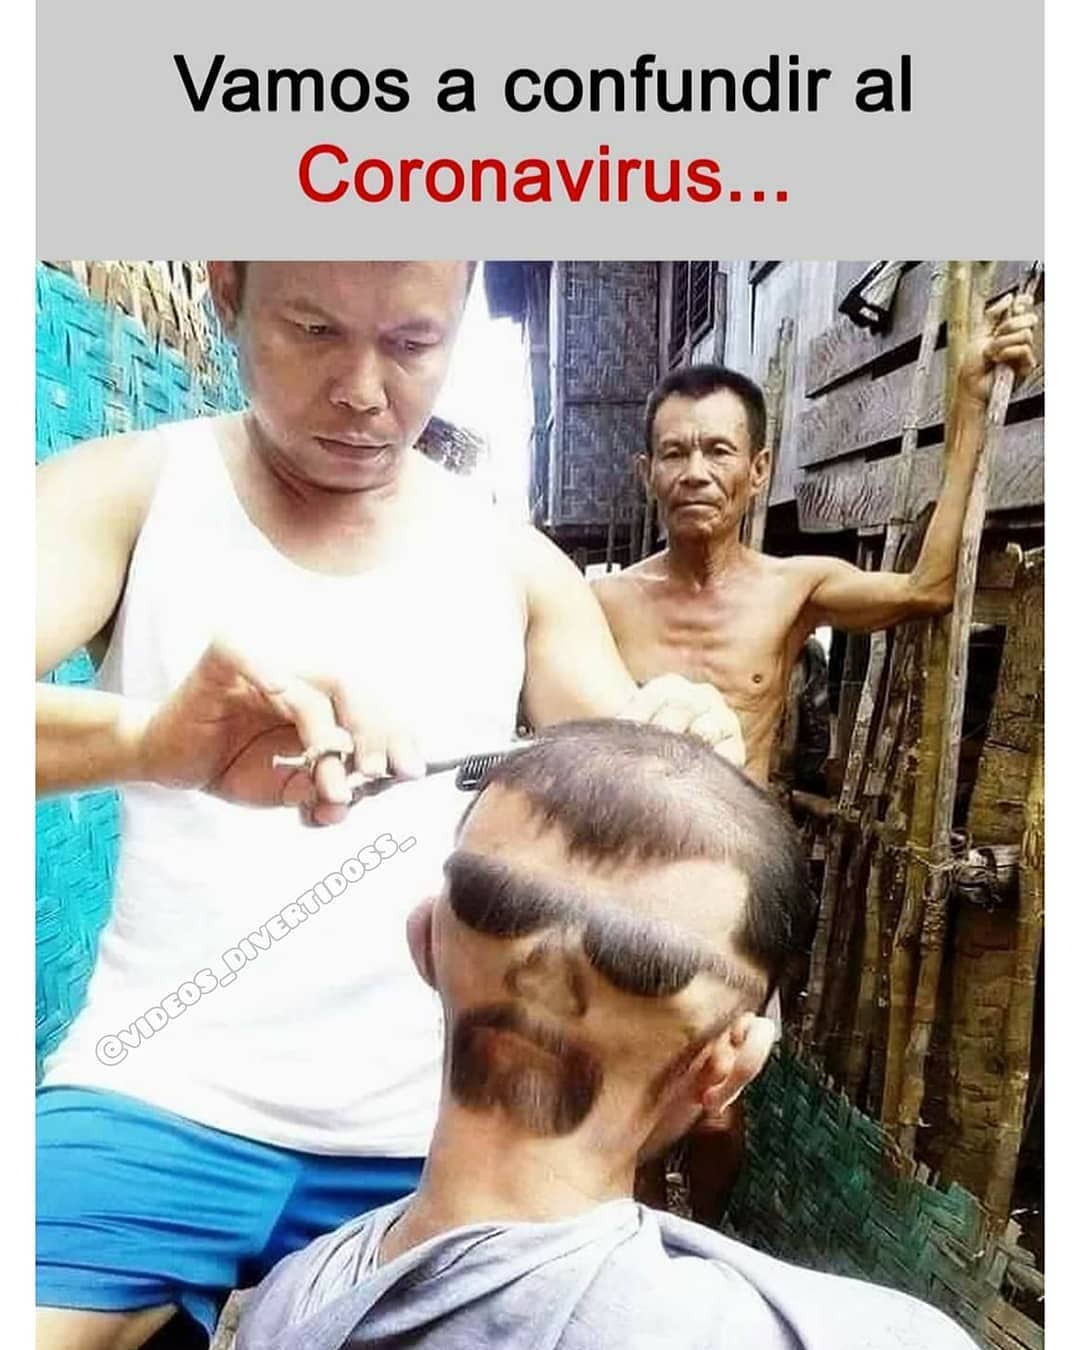 Vamos a confundir al Coronavirus...